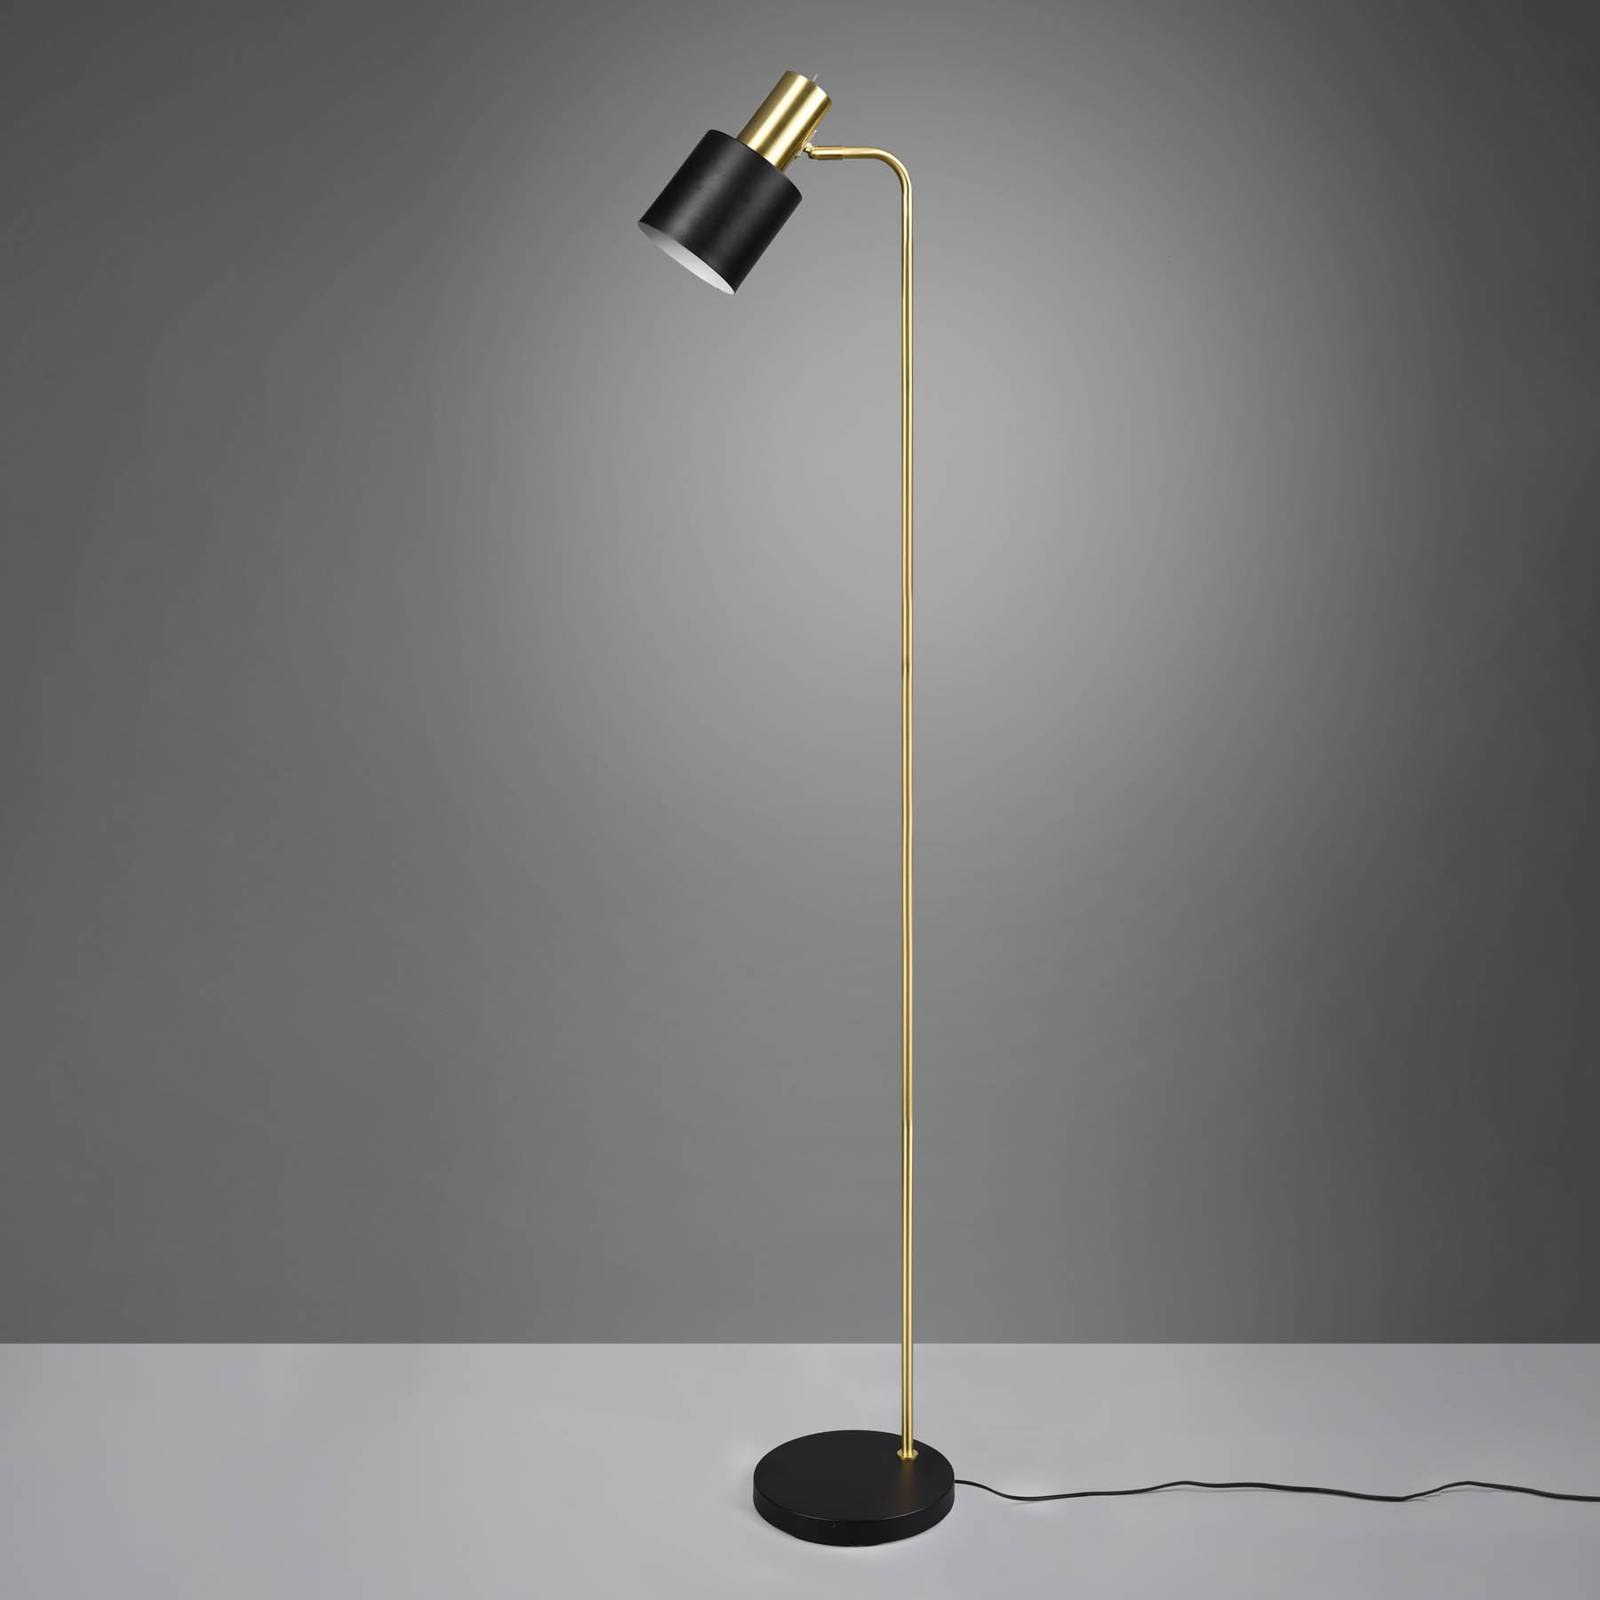 Reality Leuchten Adam floor lamp, one-bulb, black and gold